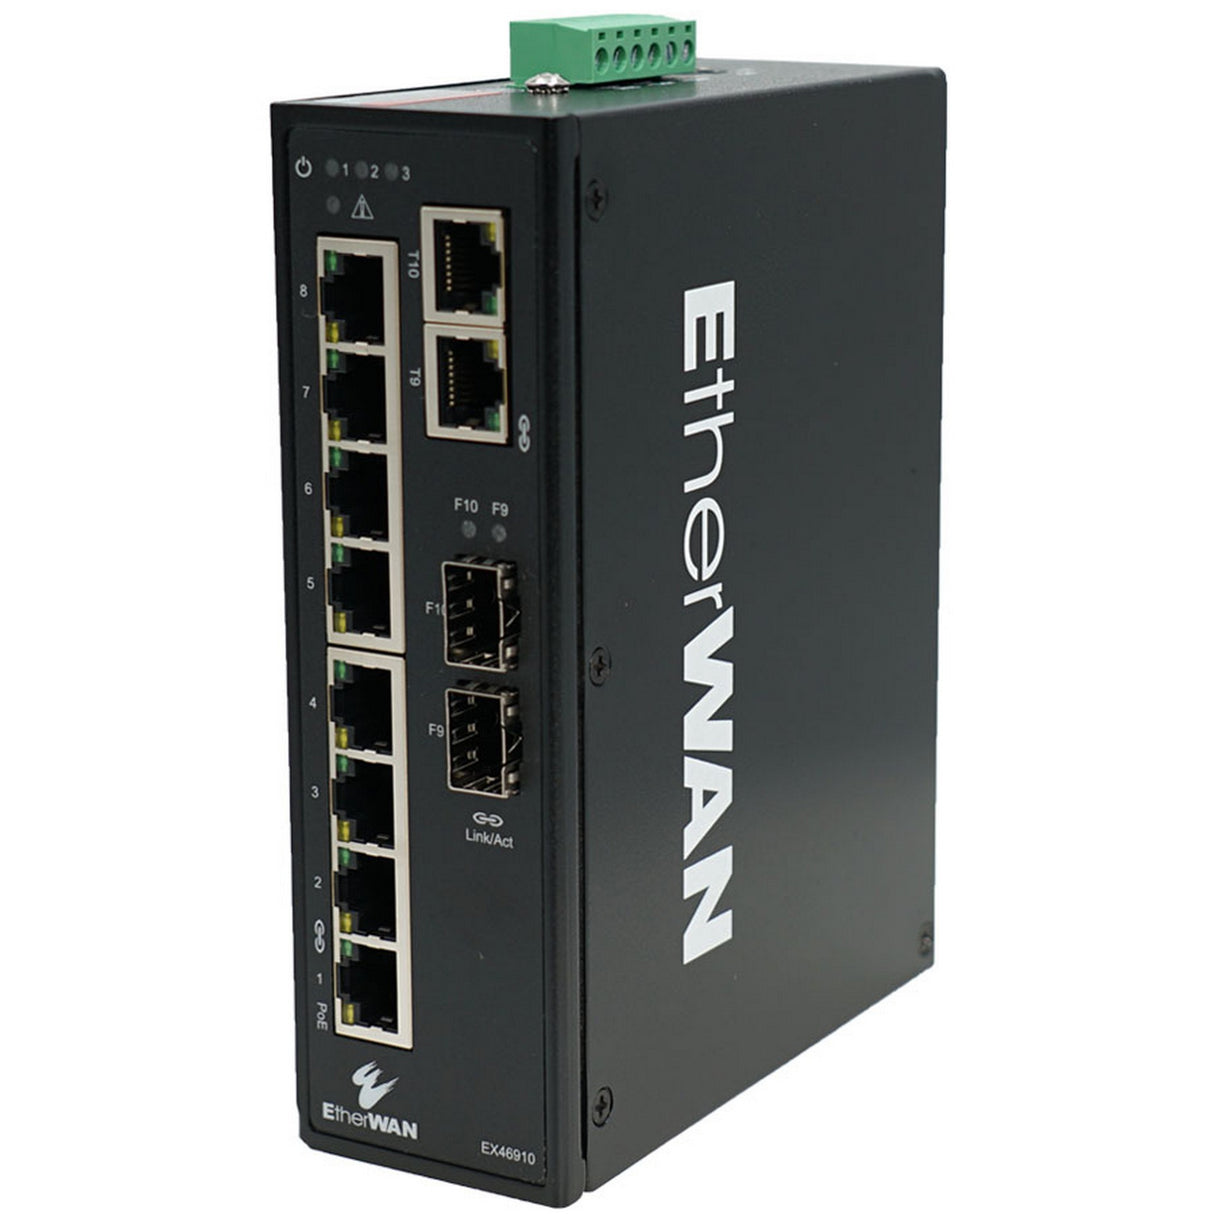 EtherWAN EX46910 Hardened Unmanaged 8-Port Gigabit PoE and 2-Port Gigabit RJ45/SFP Combo Ethernet Switch